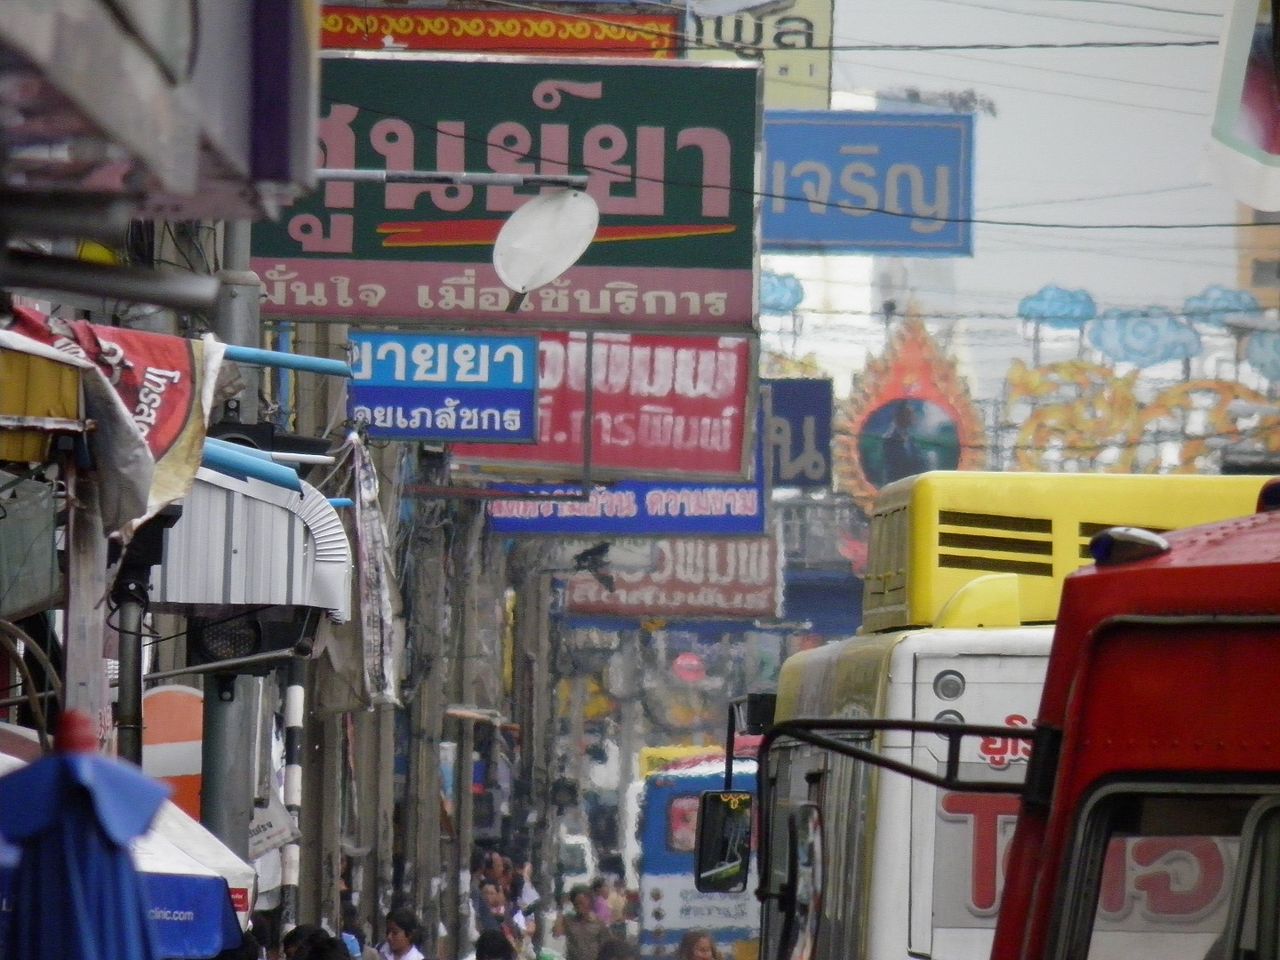 Street in Nonthaburi